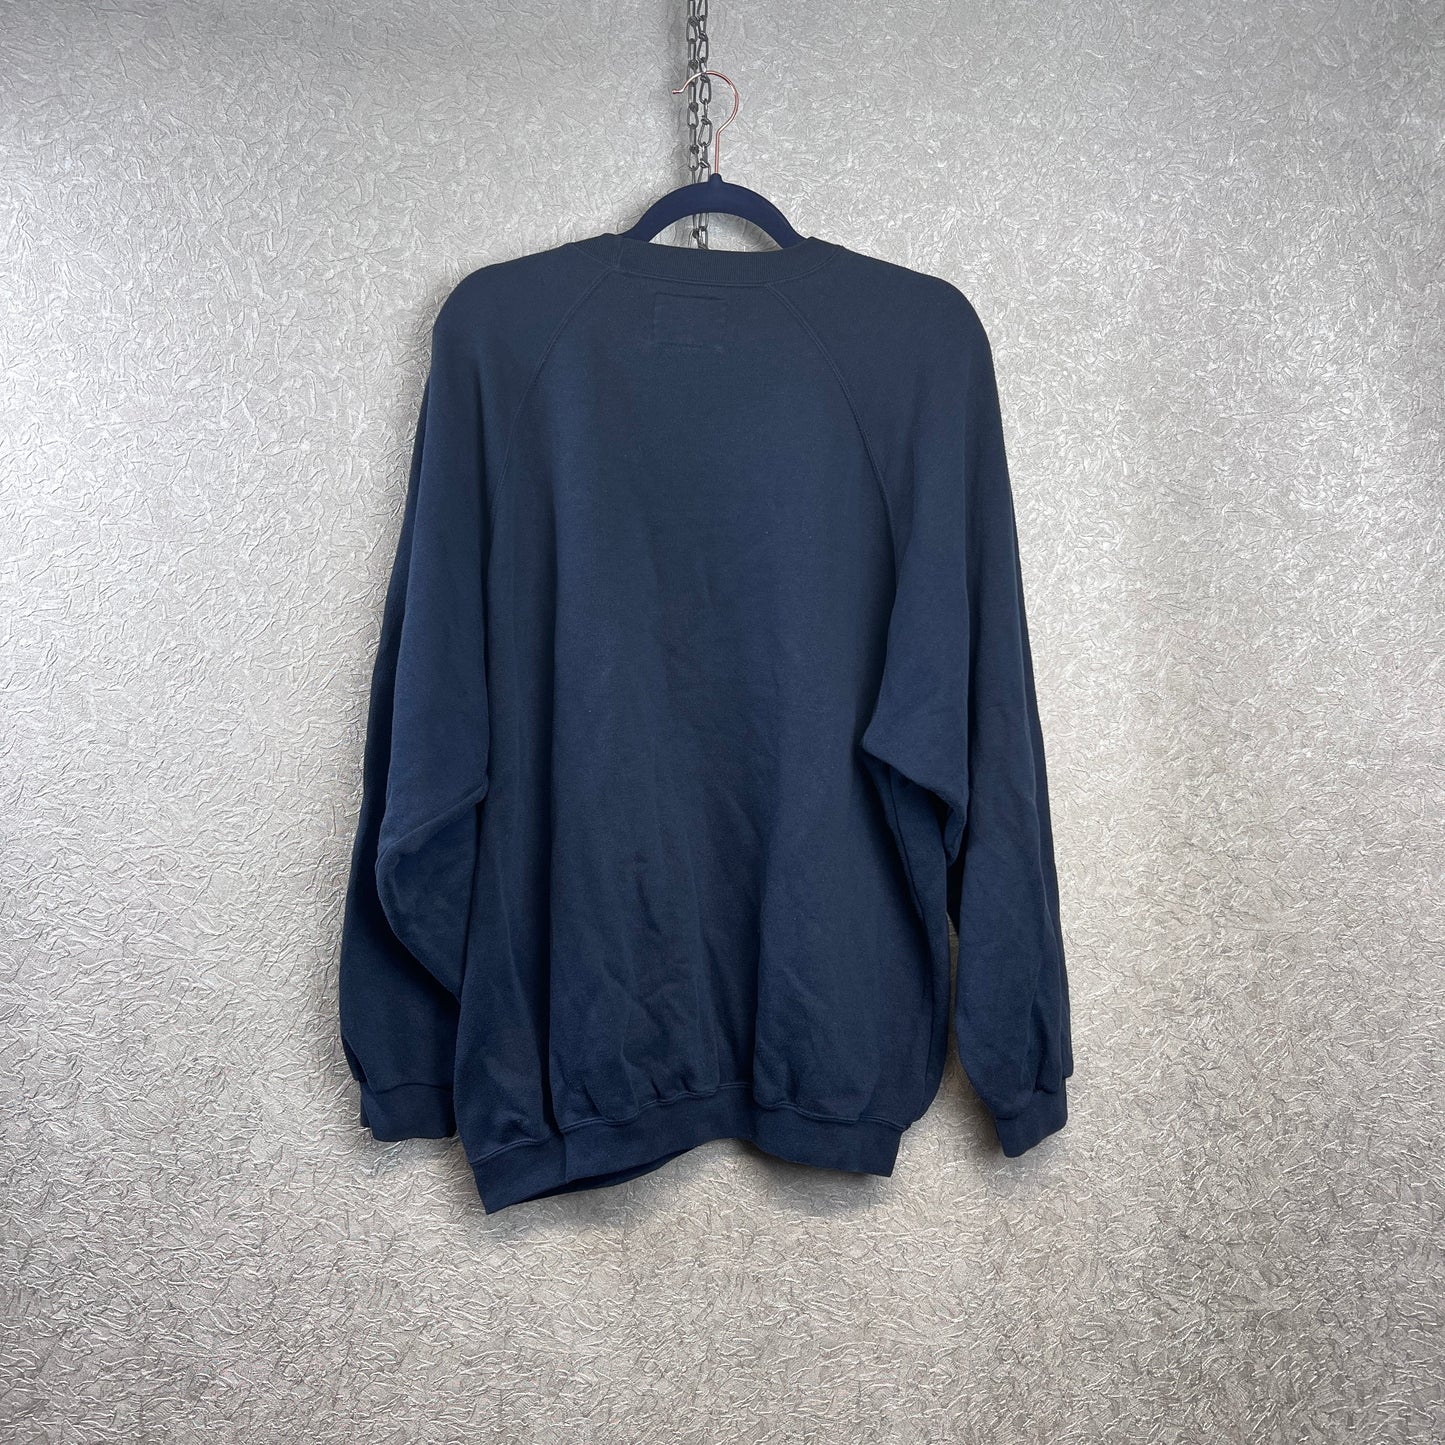 Vintage Levis Graphic Spellout Sweater X-Large